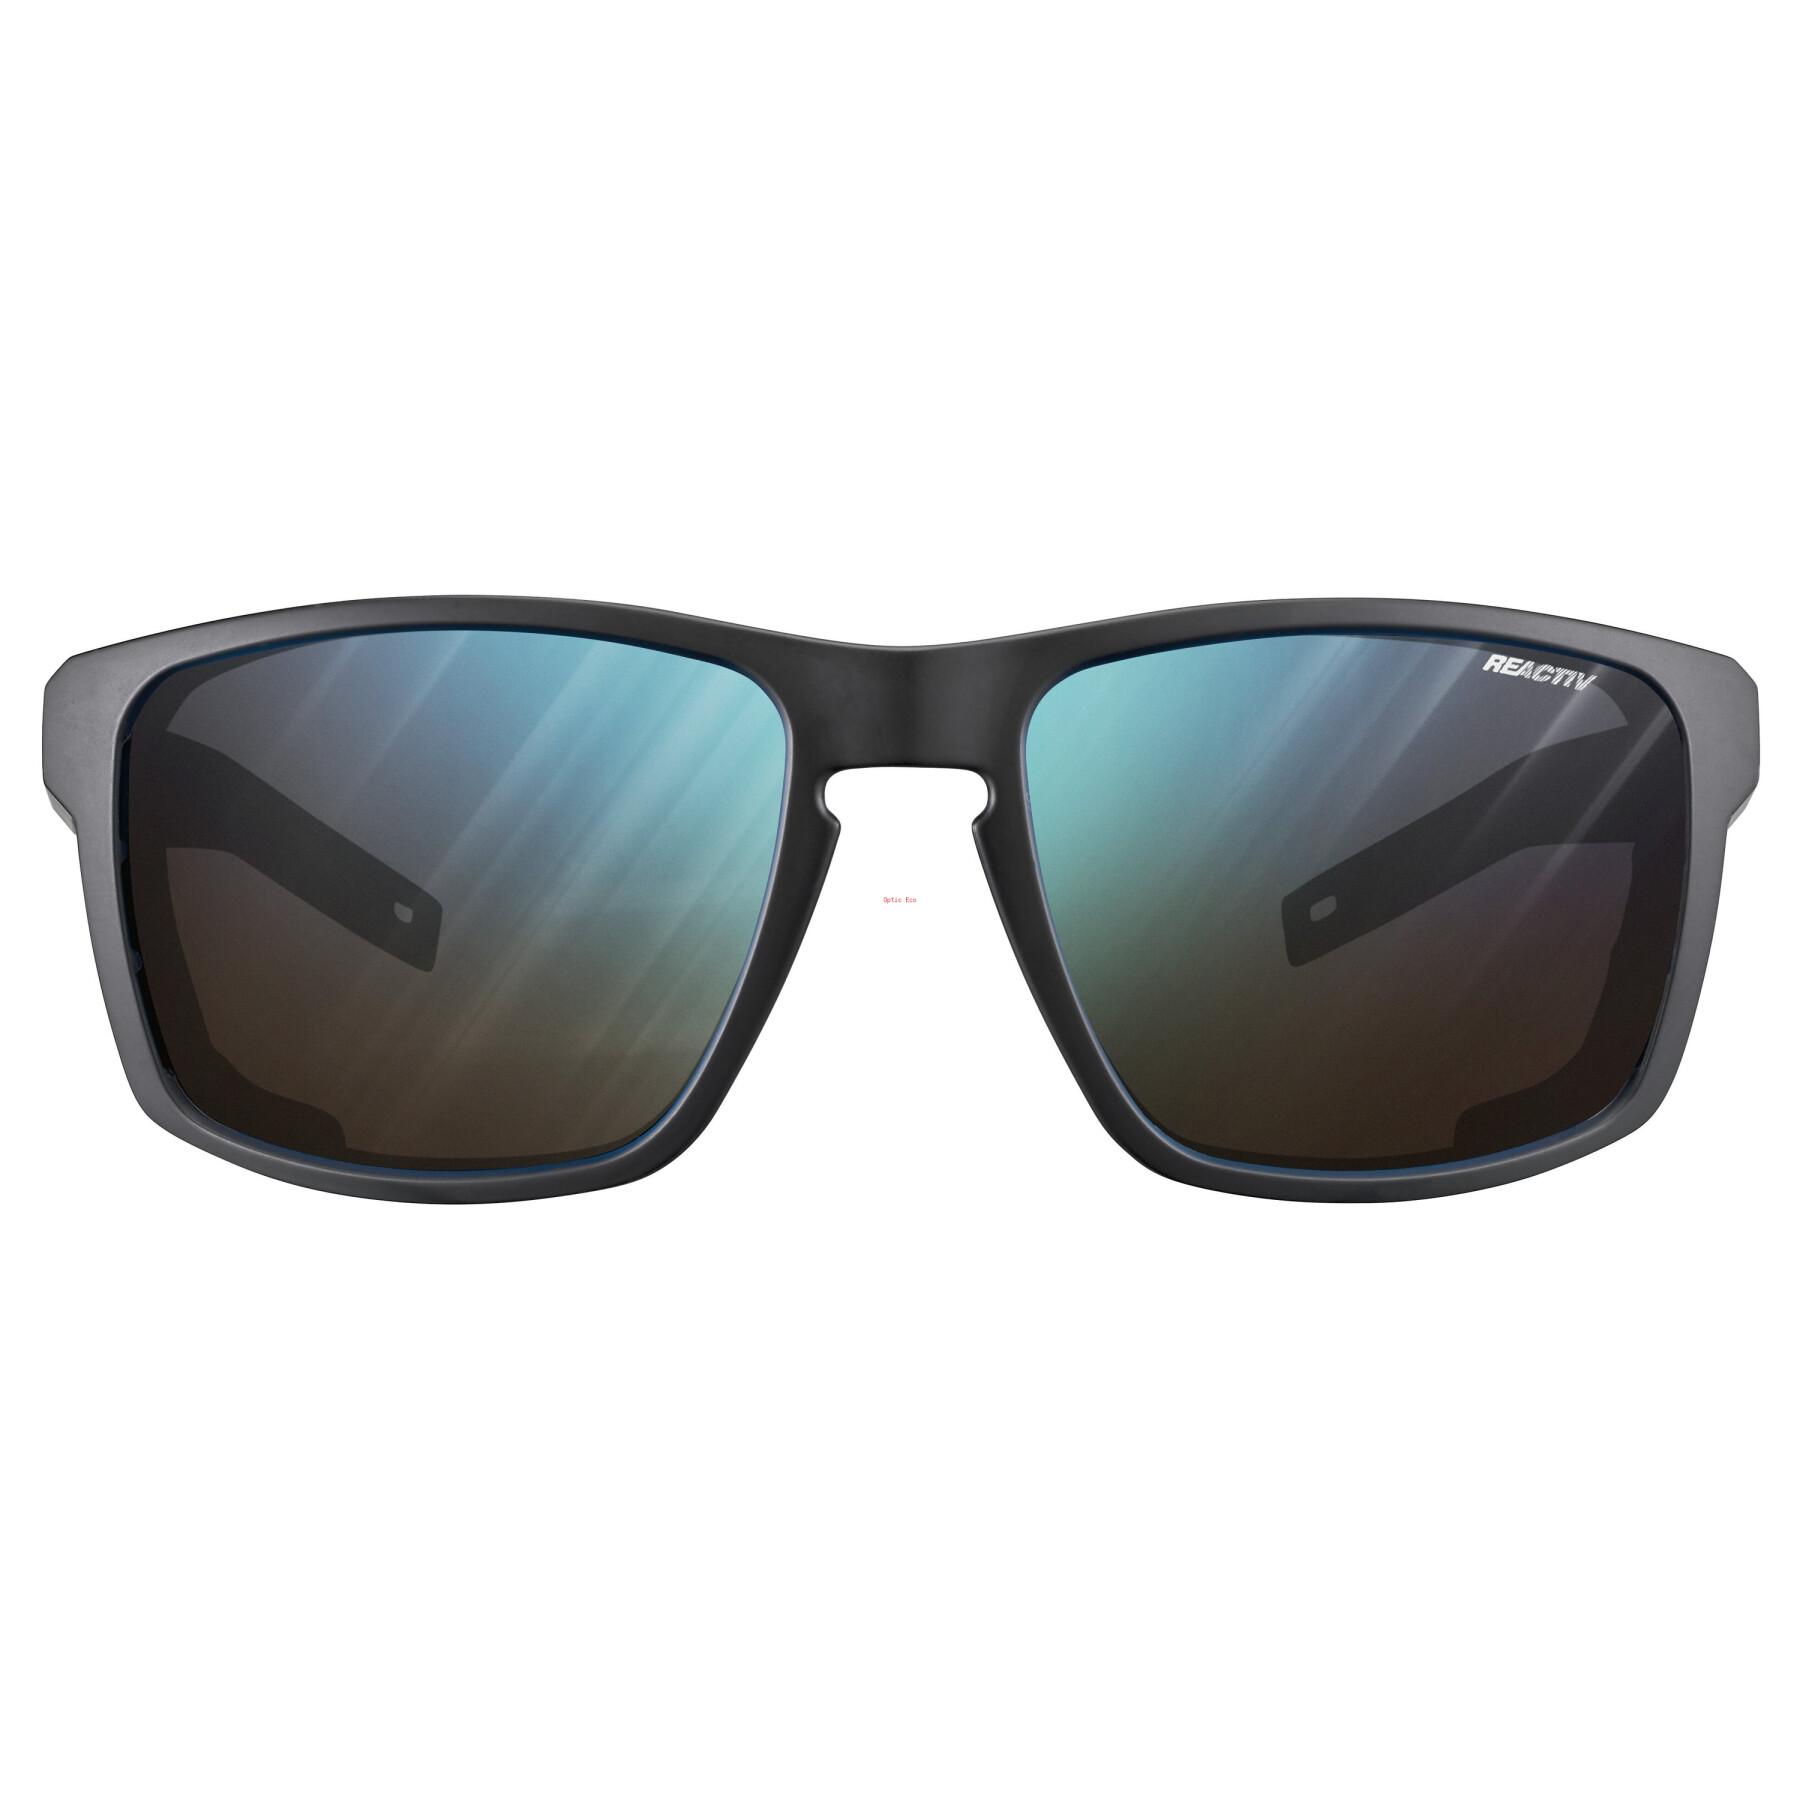 Sunglasses Julbo Shield - Reactiv Performance 2-4